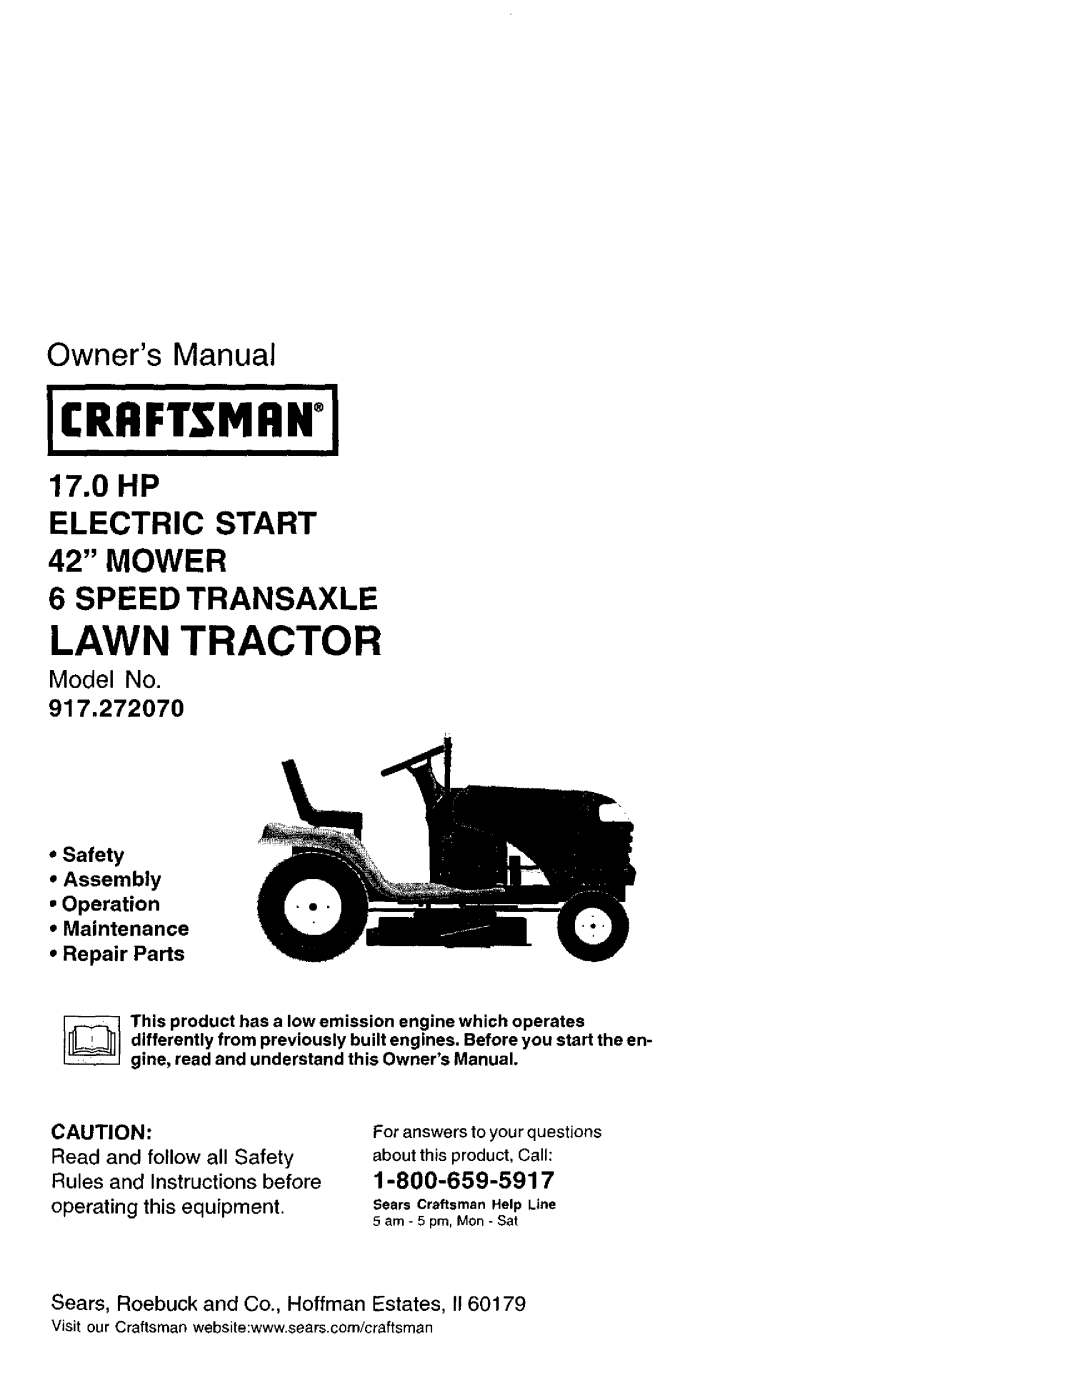 Craftsman 917.27207 owner manual Model No, •Safety =Assembly • Operation • Maintenance, •Repair Parts, Icrrftsmrn+I 